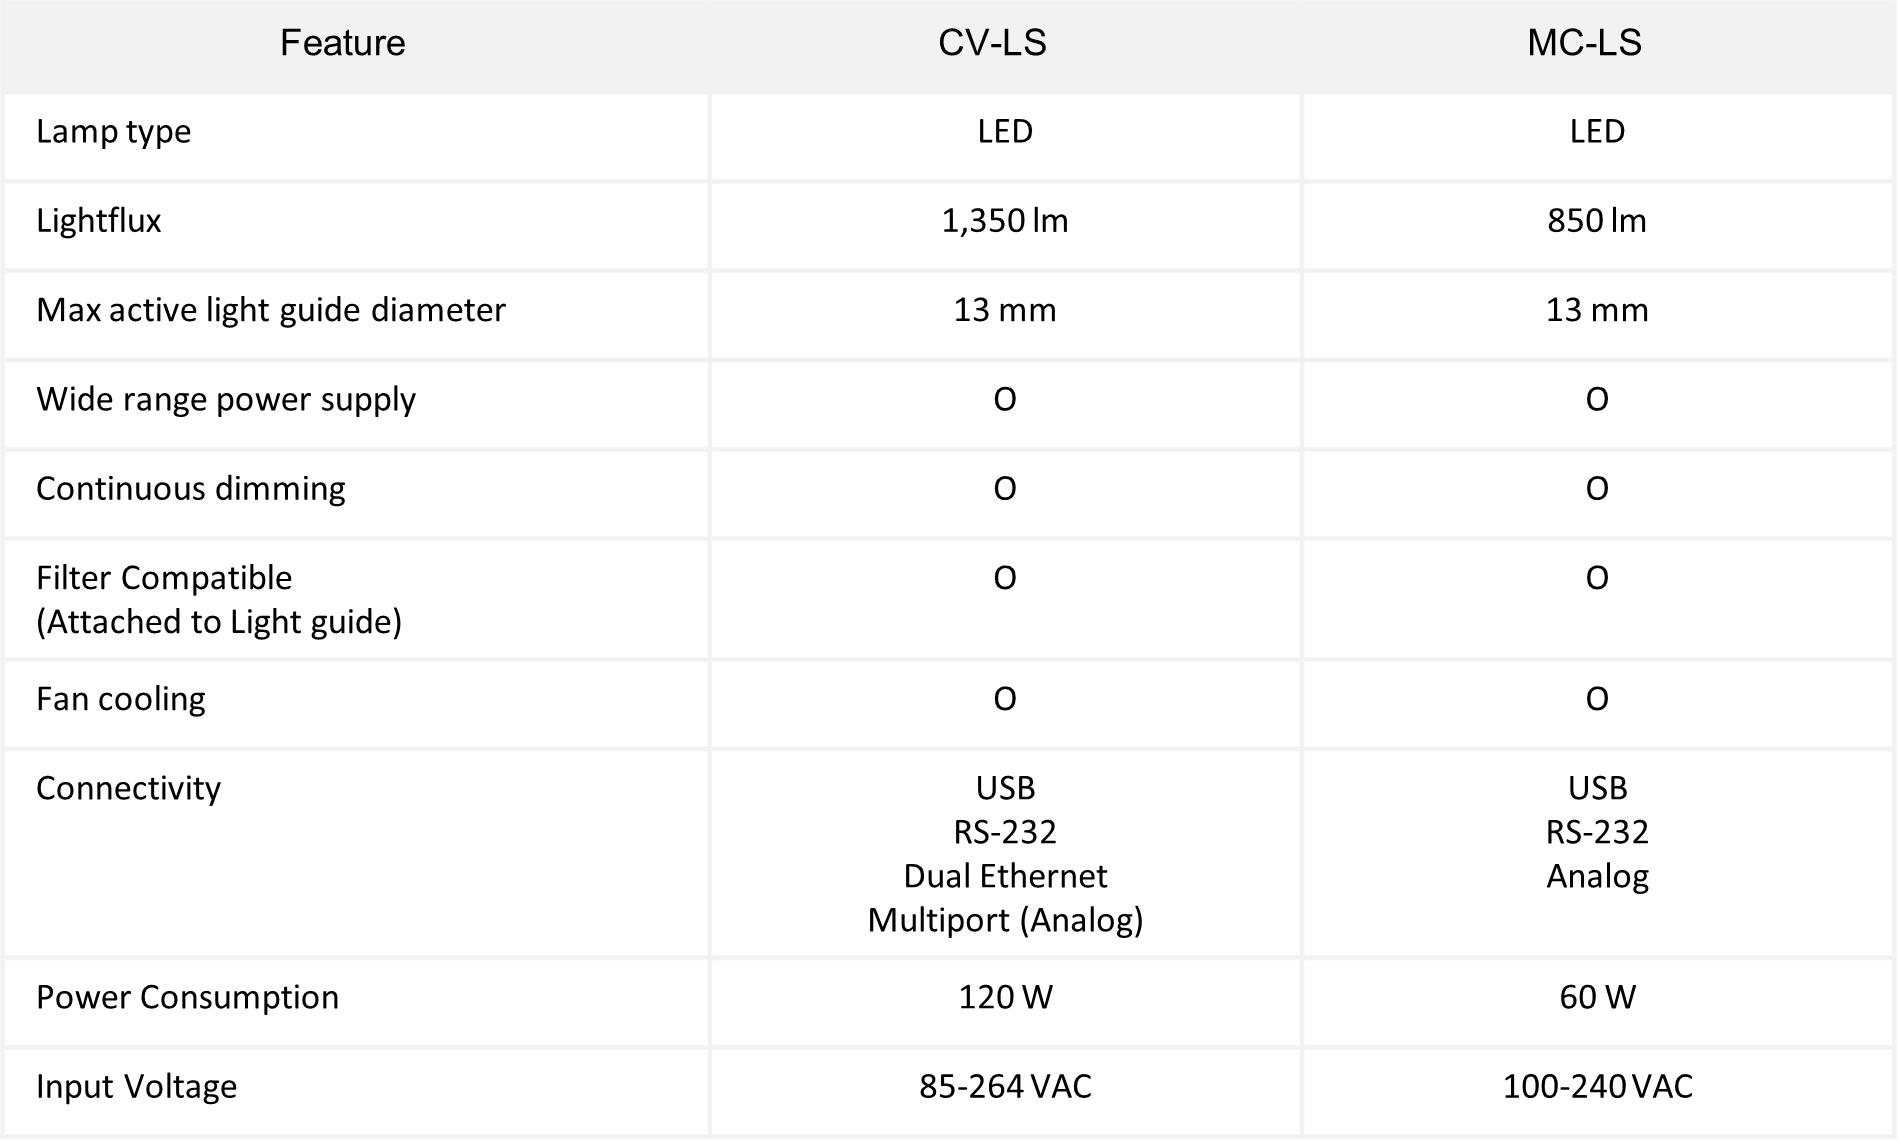 OnEx - Fontes de Luz ColdVision - Tabela de recursos